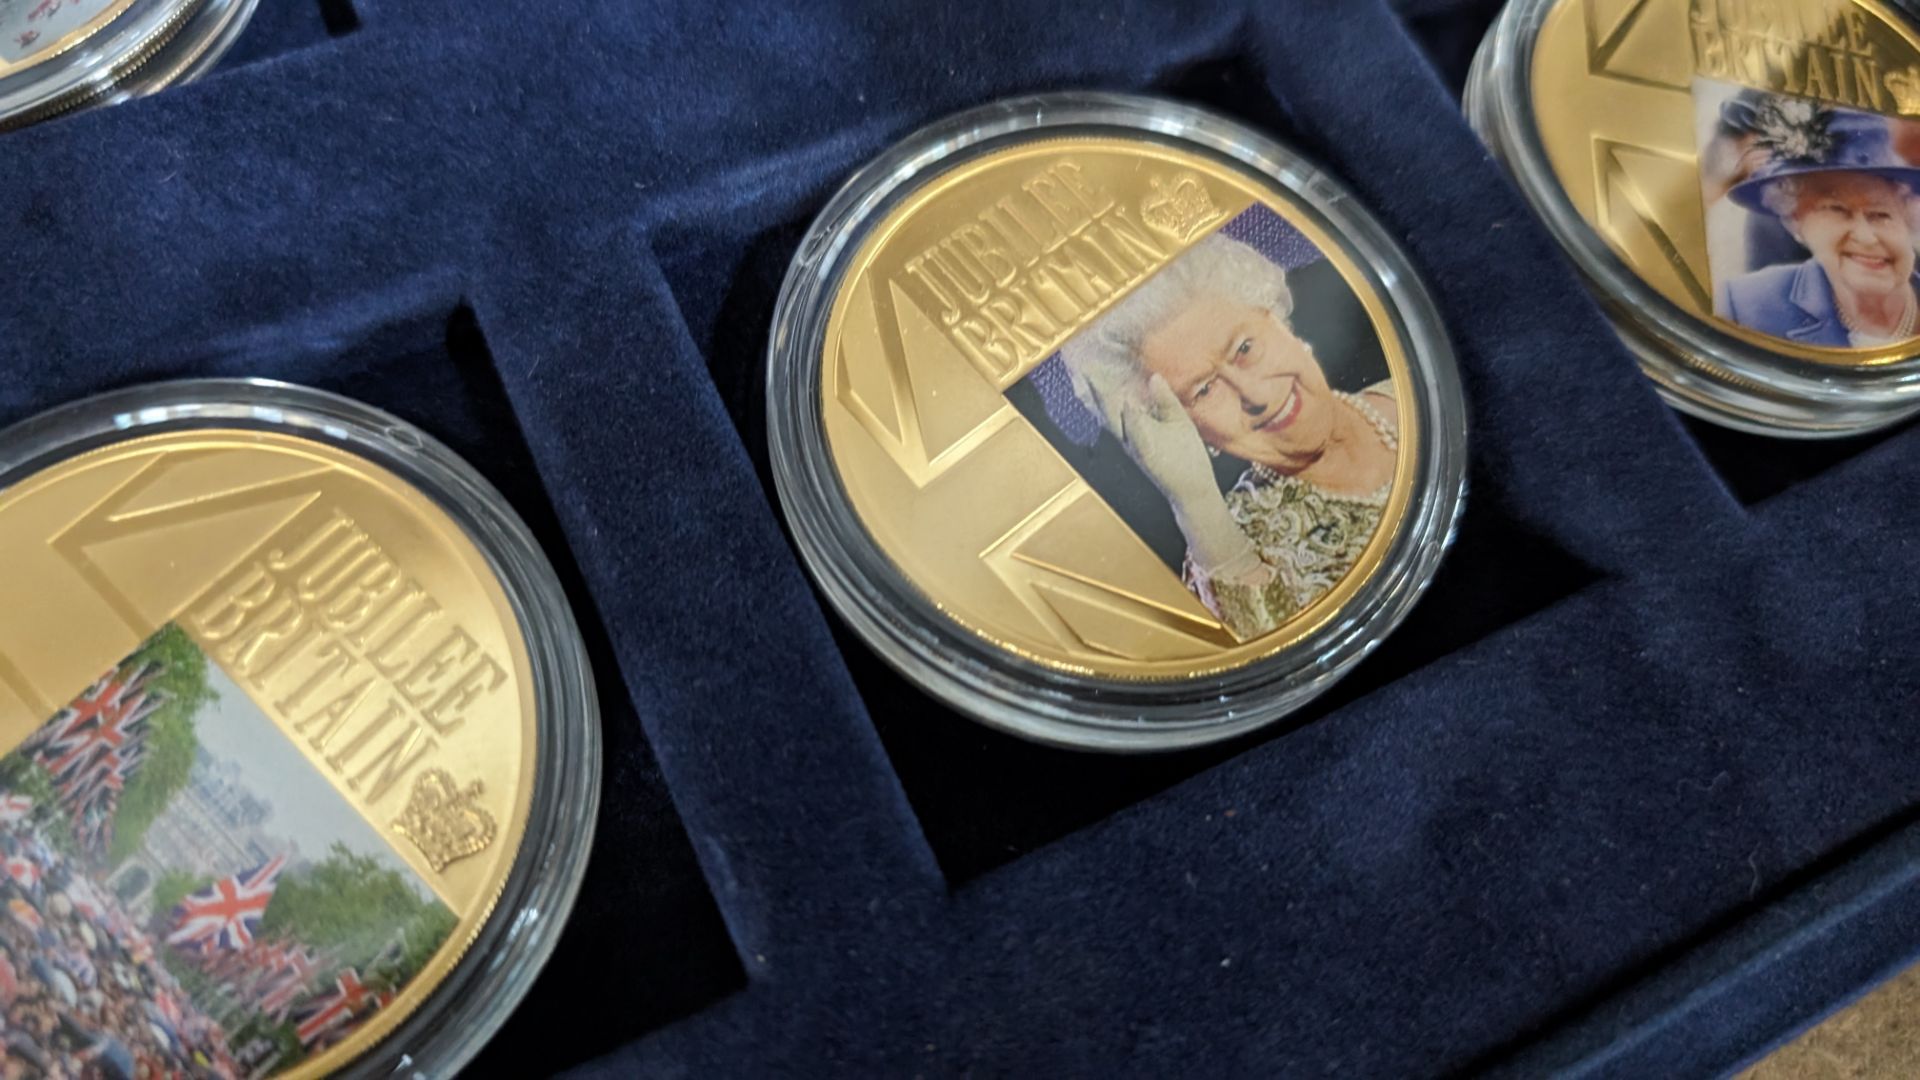 Diamond Jubilee set of 6 decorative coins including presentation case - Image 4 of 12